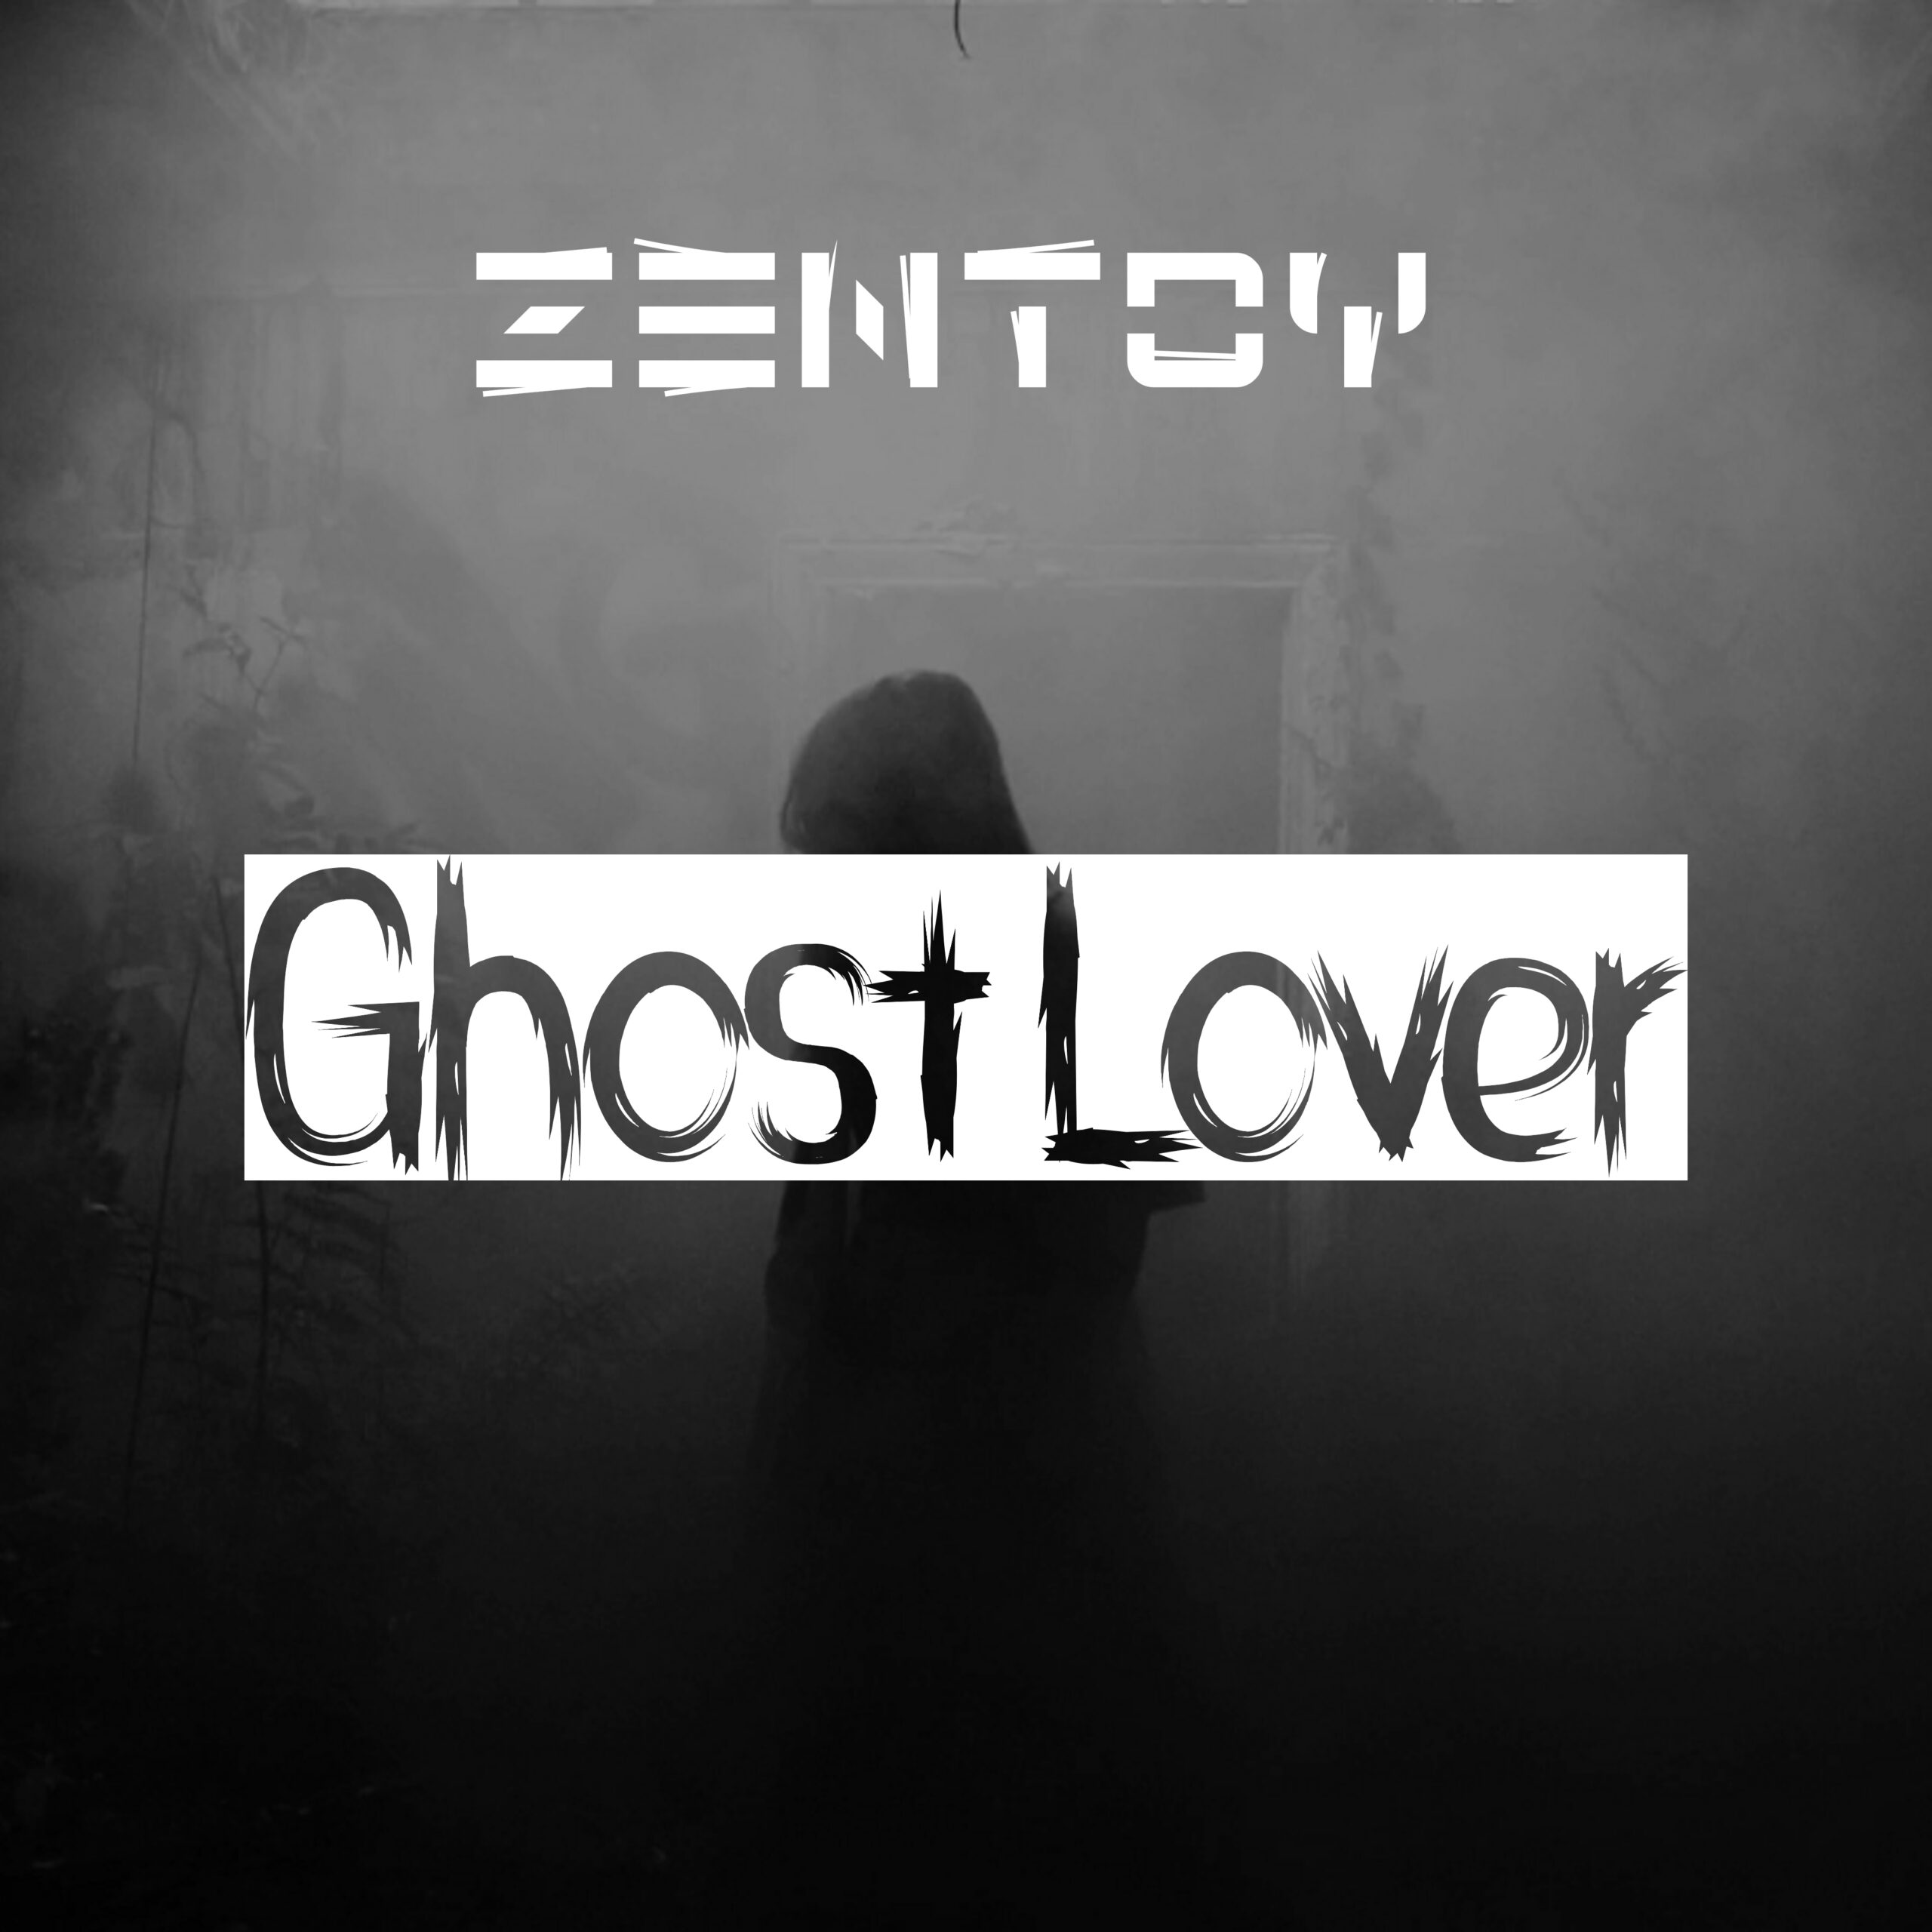 ZenToy - Ghost Lover